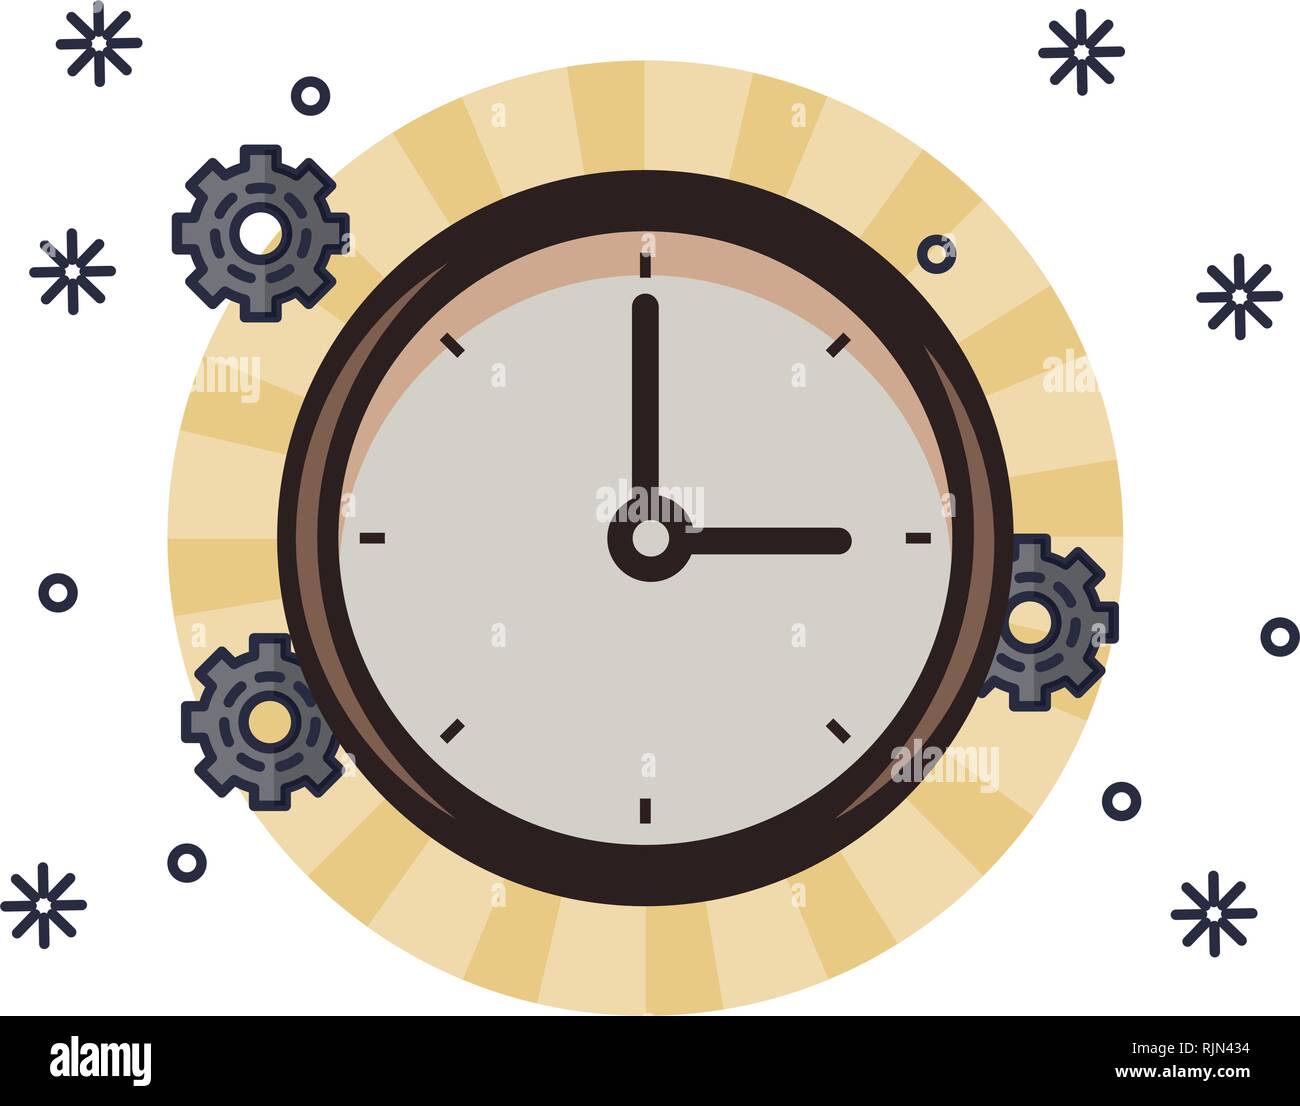 Horloge temps cartoon Image Vectorielle Stock - Alamy